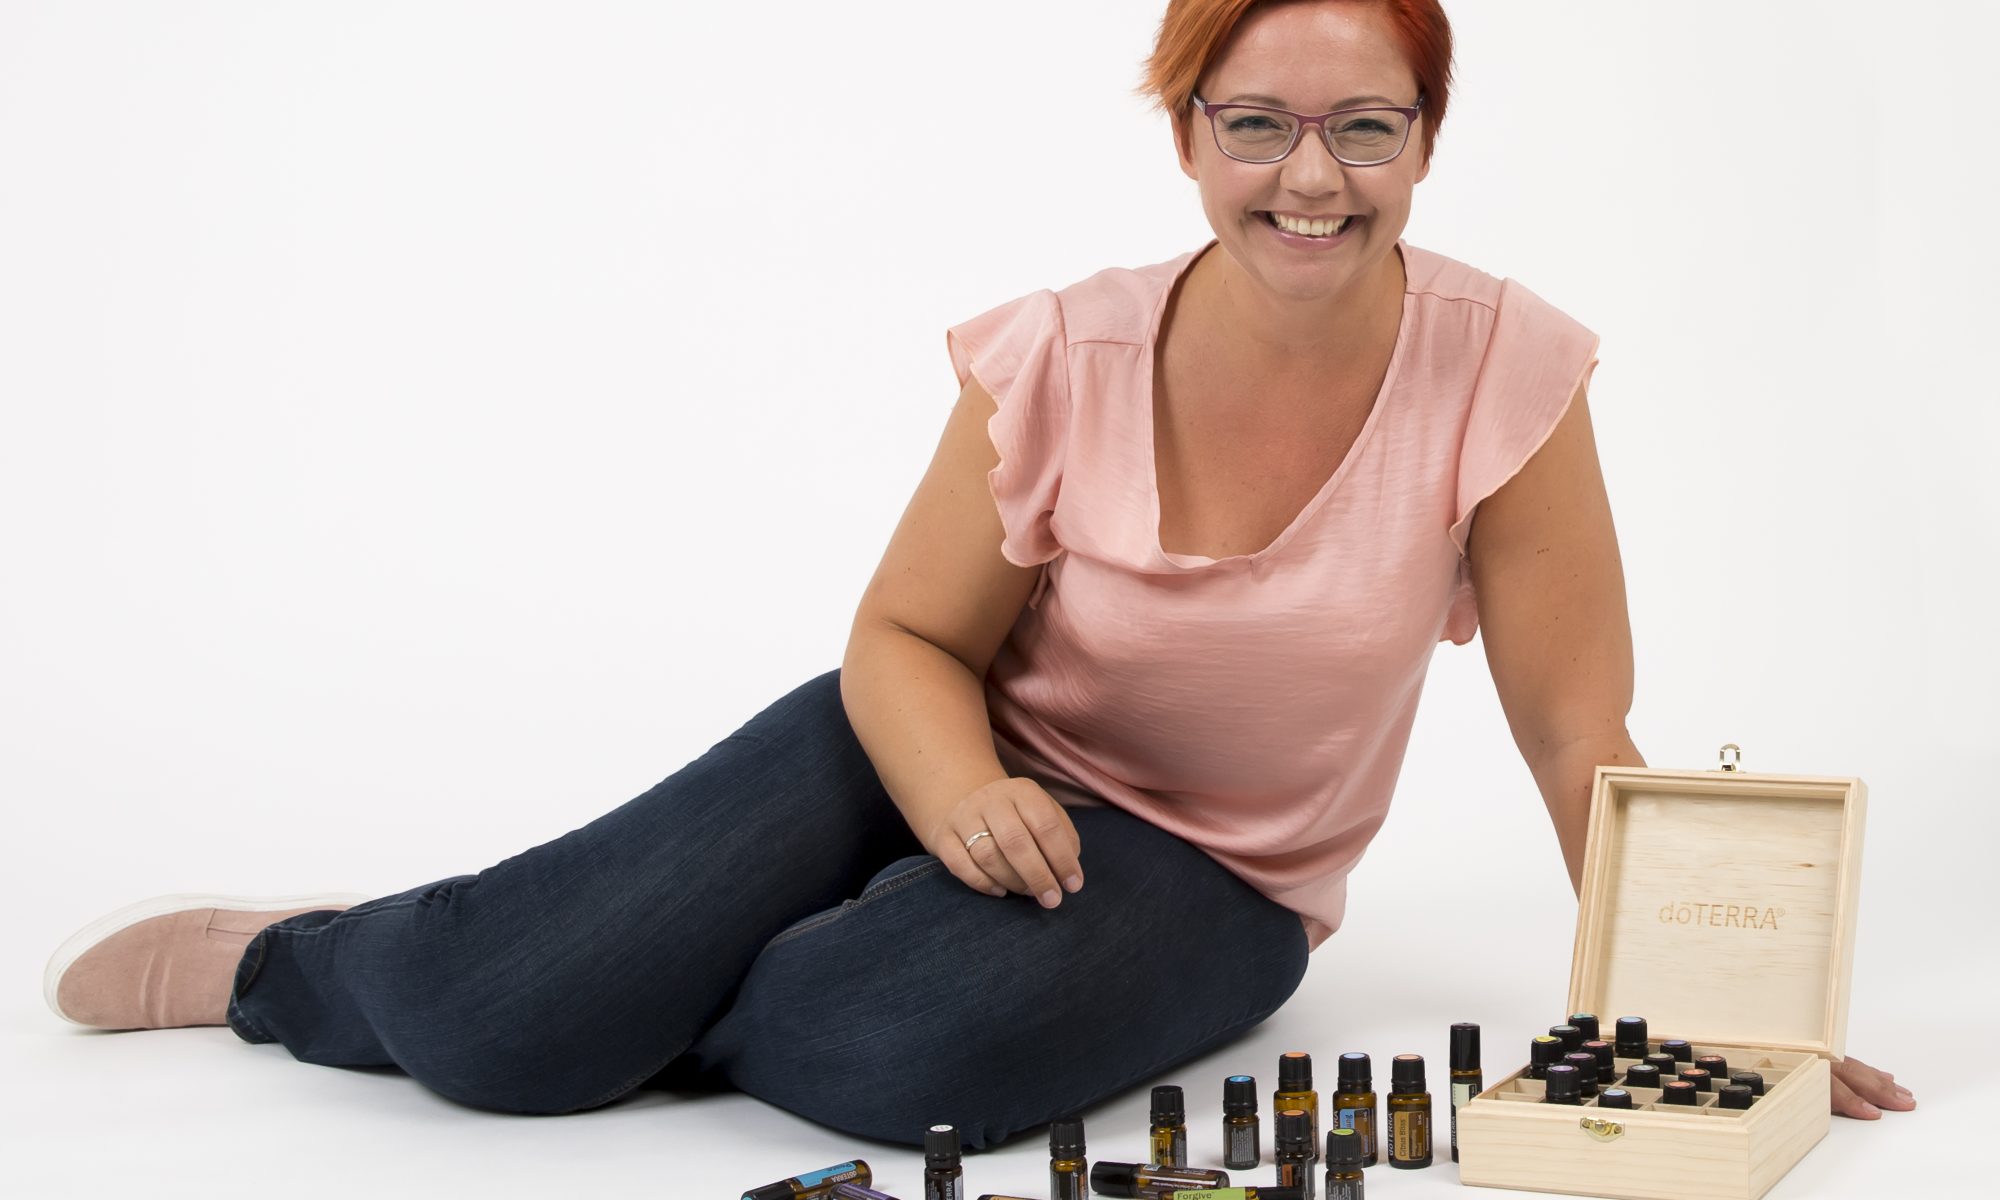 Heidie Kosiara din ekspert inden for aromaterapi